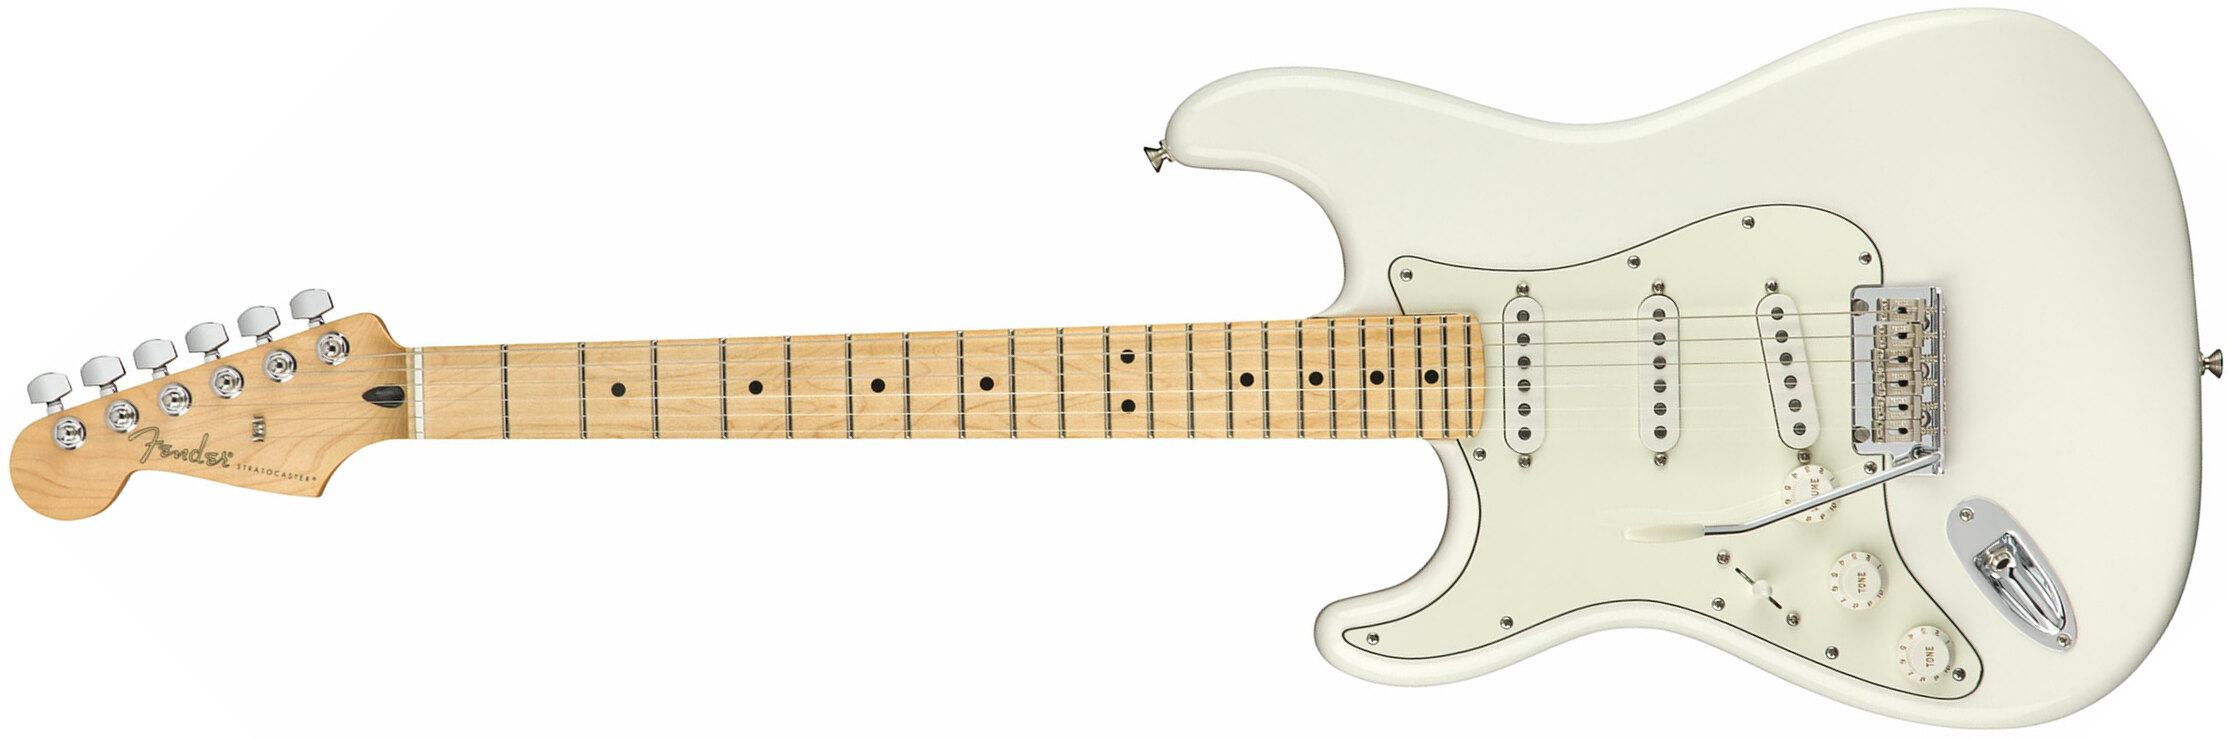 Fender Strat Player Lh Gaucher Mex Sss Mn - Polar White - Left-handed electric guitar - Main picture